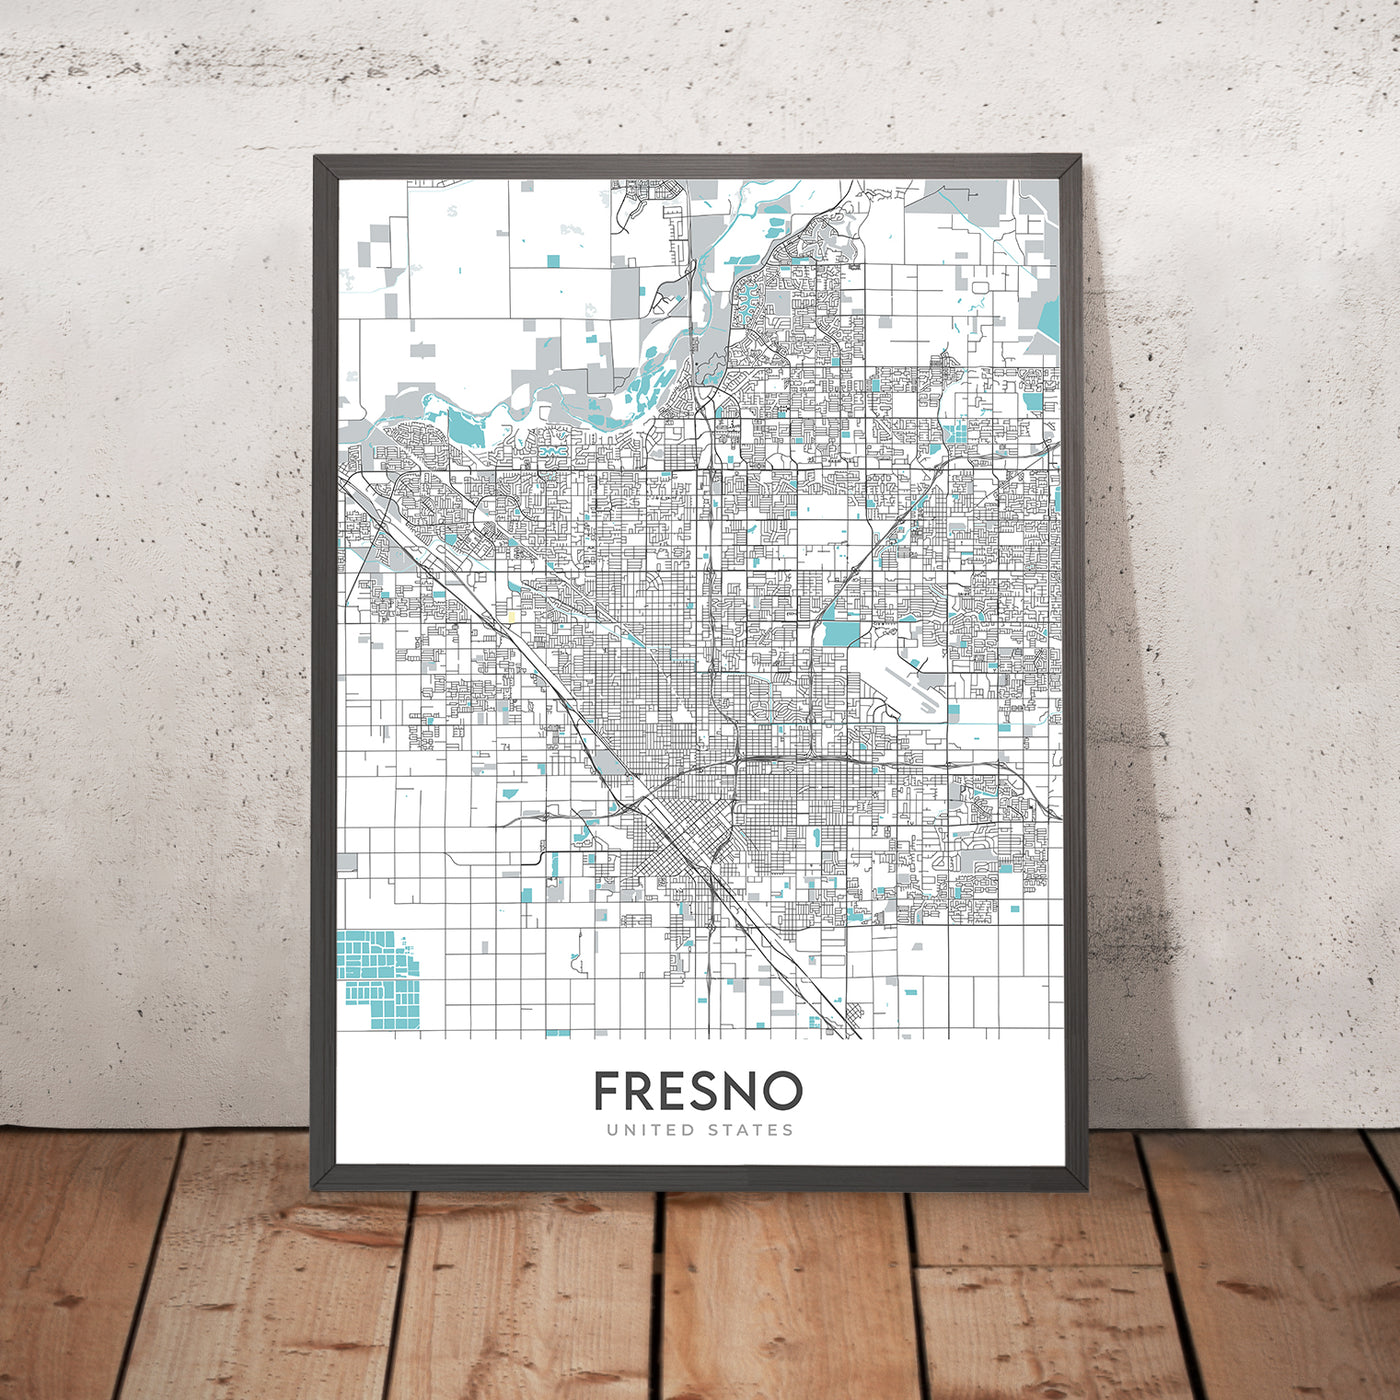 Modern City Map of Fresno, CA: Downtown, Fresno Chaffee Zoo, Woodward Park, Fig Garden Village, Save Mart Center